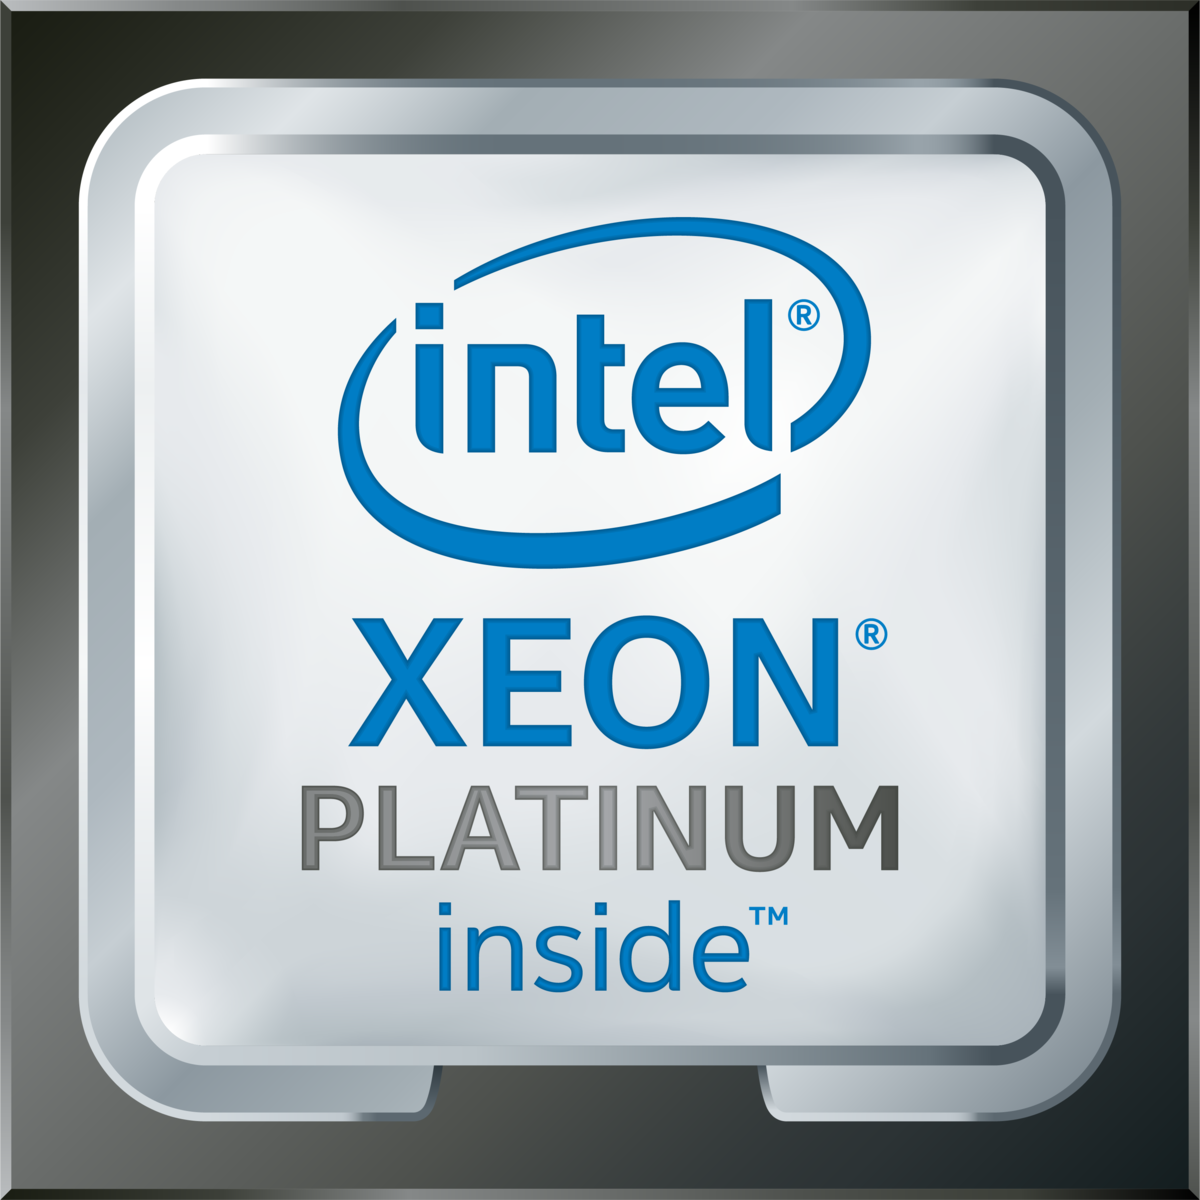 Intel(R) Xeon(R) Platinum 8275CL CPU @ 3.00GHz's logo